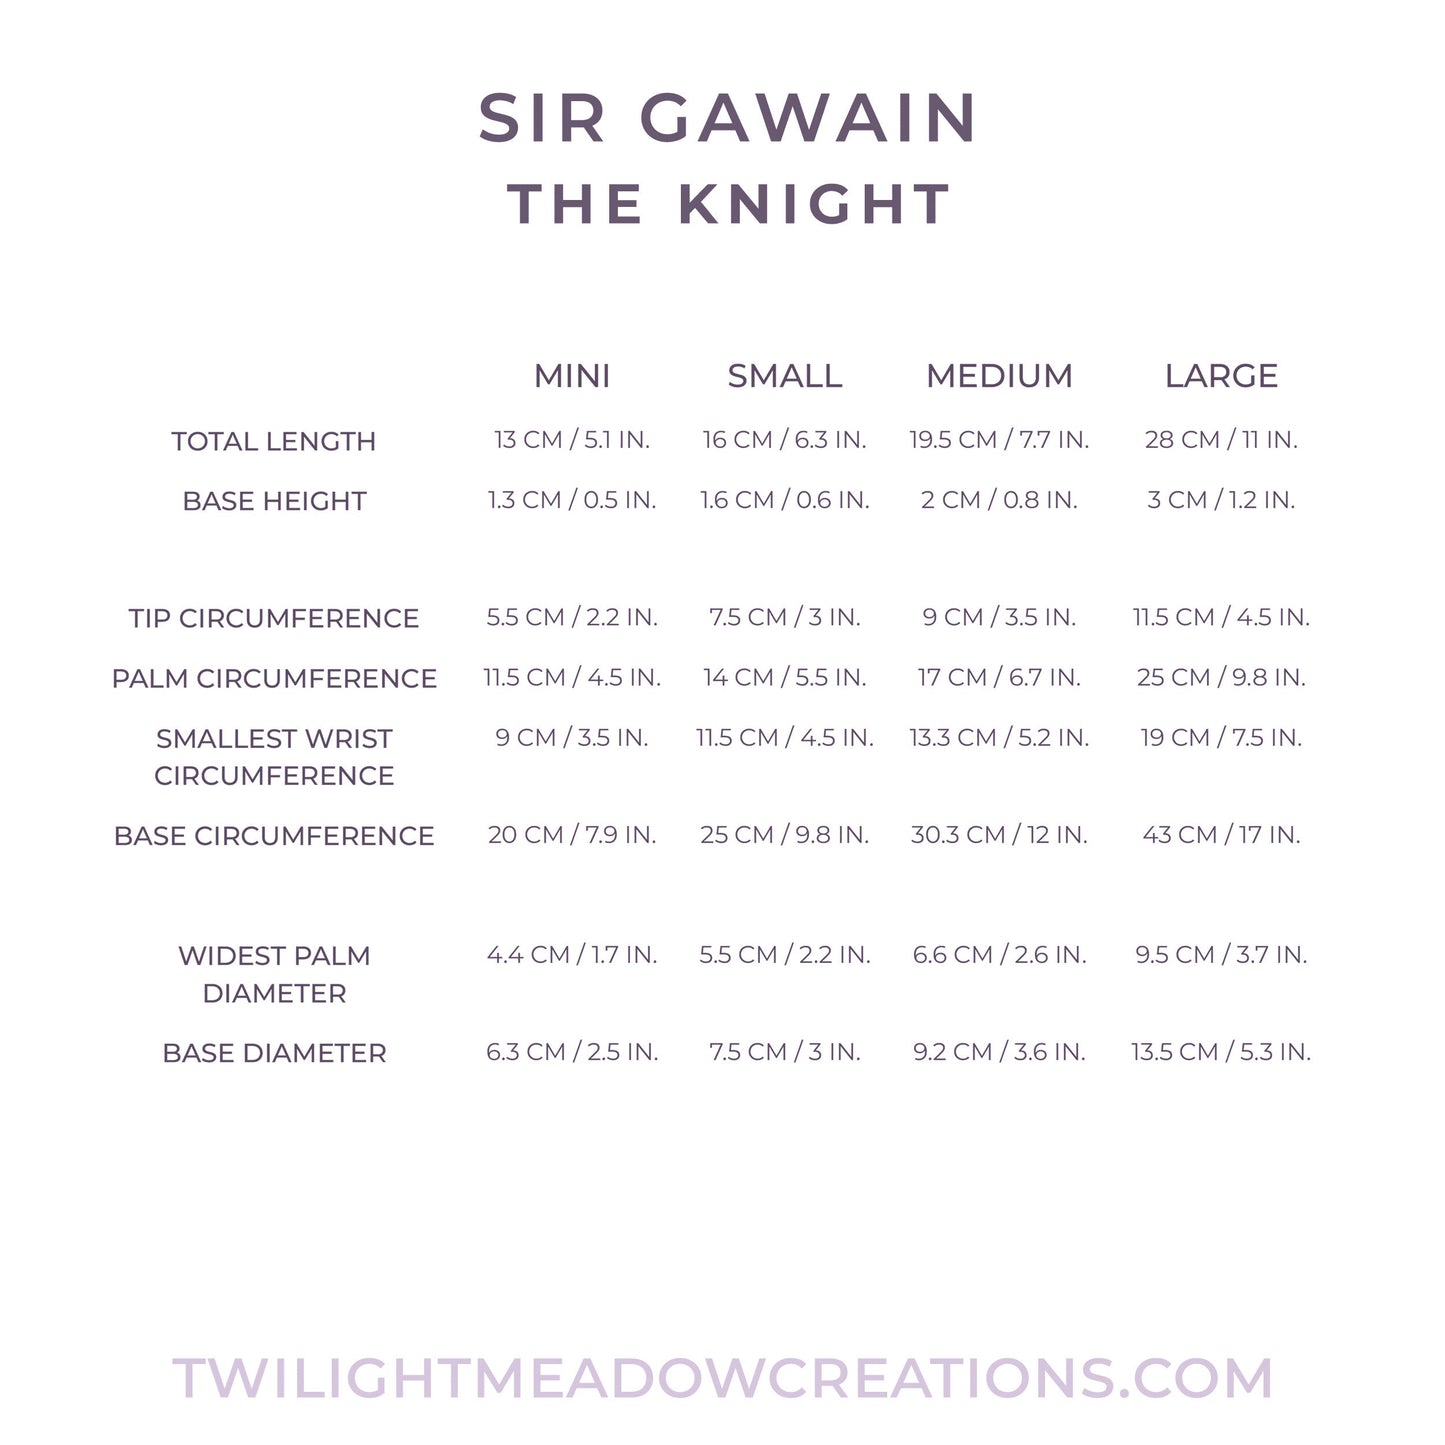 Large Sir Gawain (Firmness: Medium)